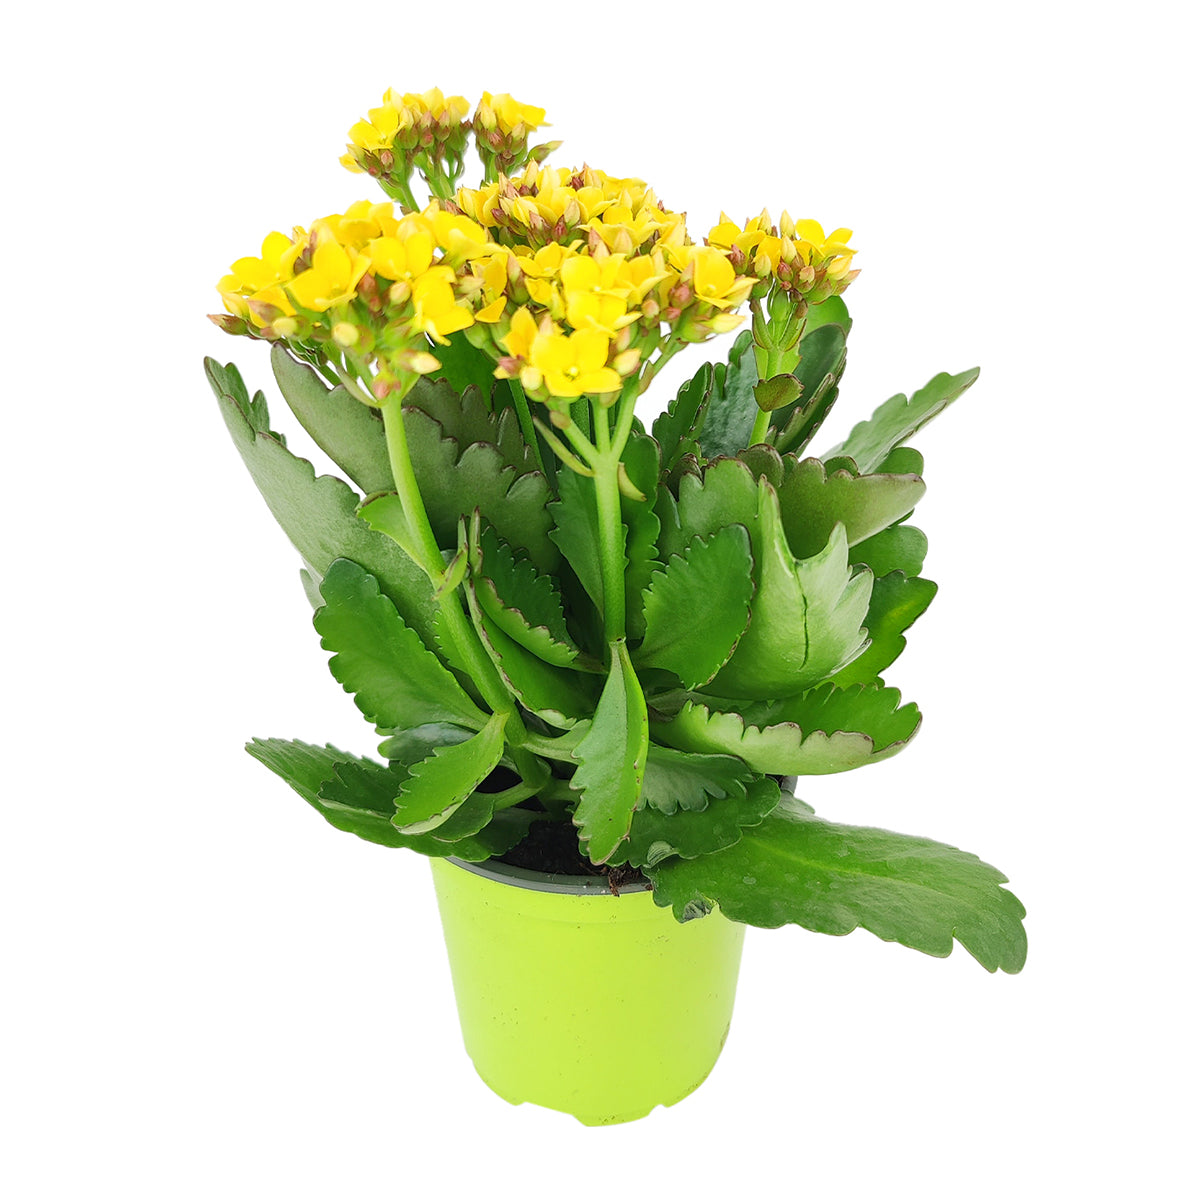 Kalanchoe blossfeldiana Calandiva Yellow, best flowering houseplant, gift plant, easy to care for colorful houseplant